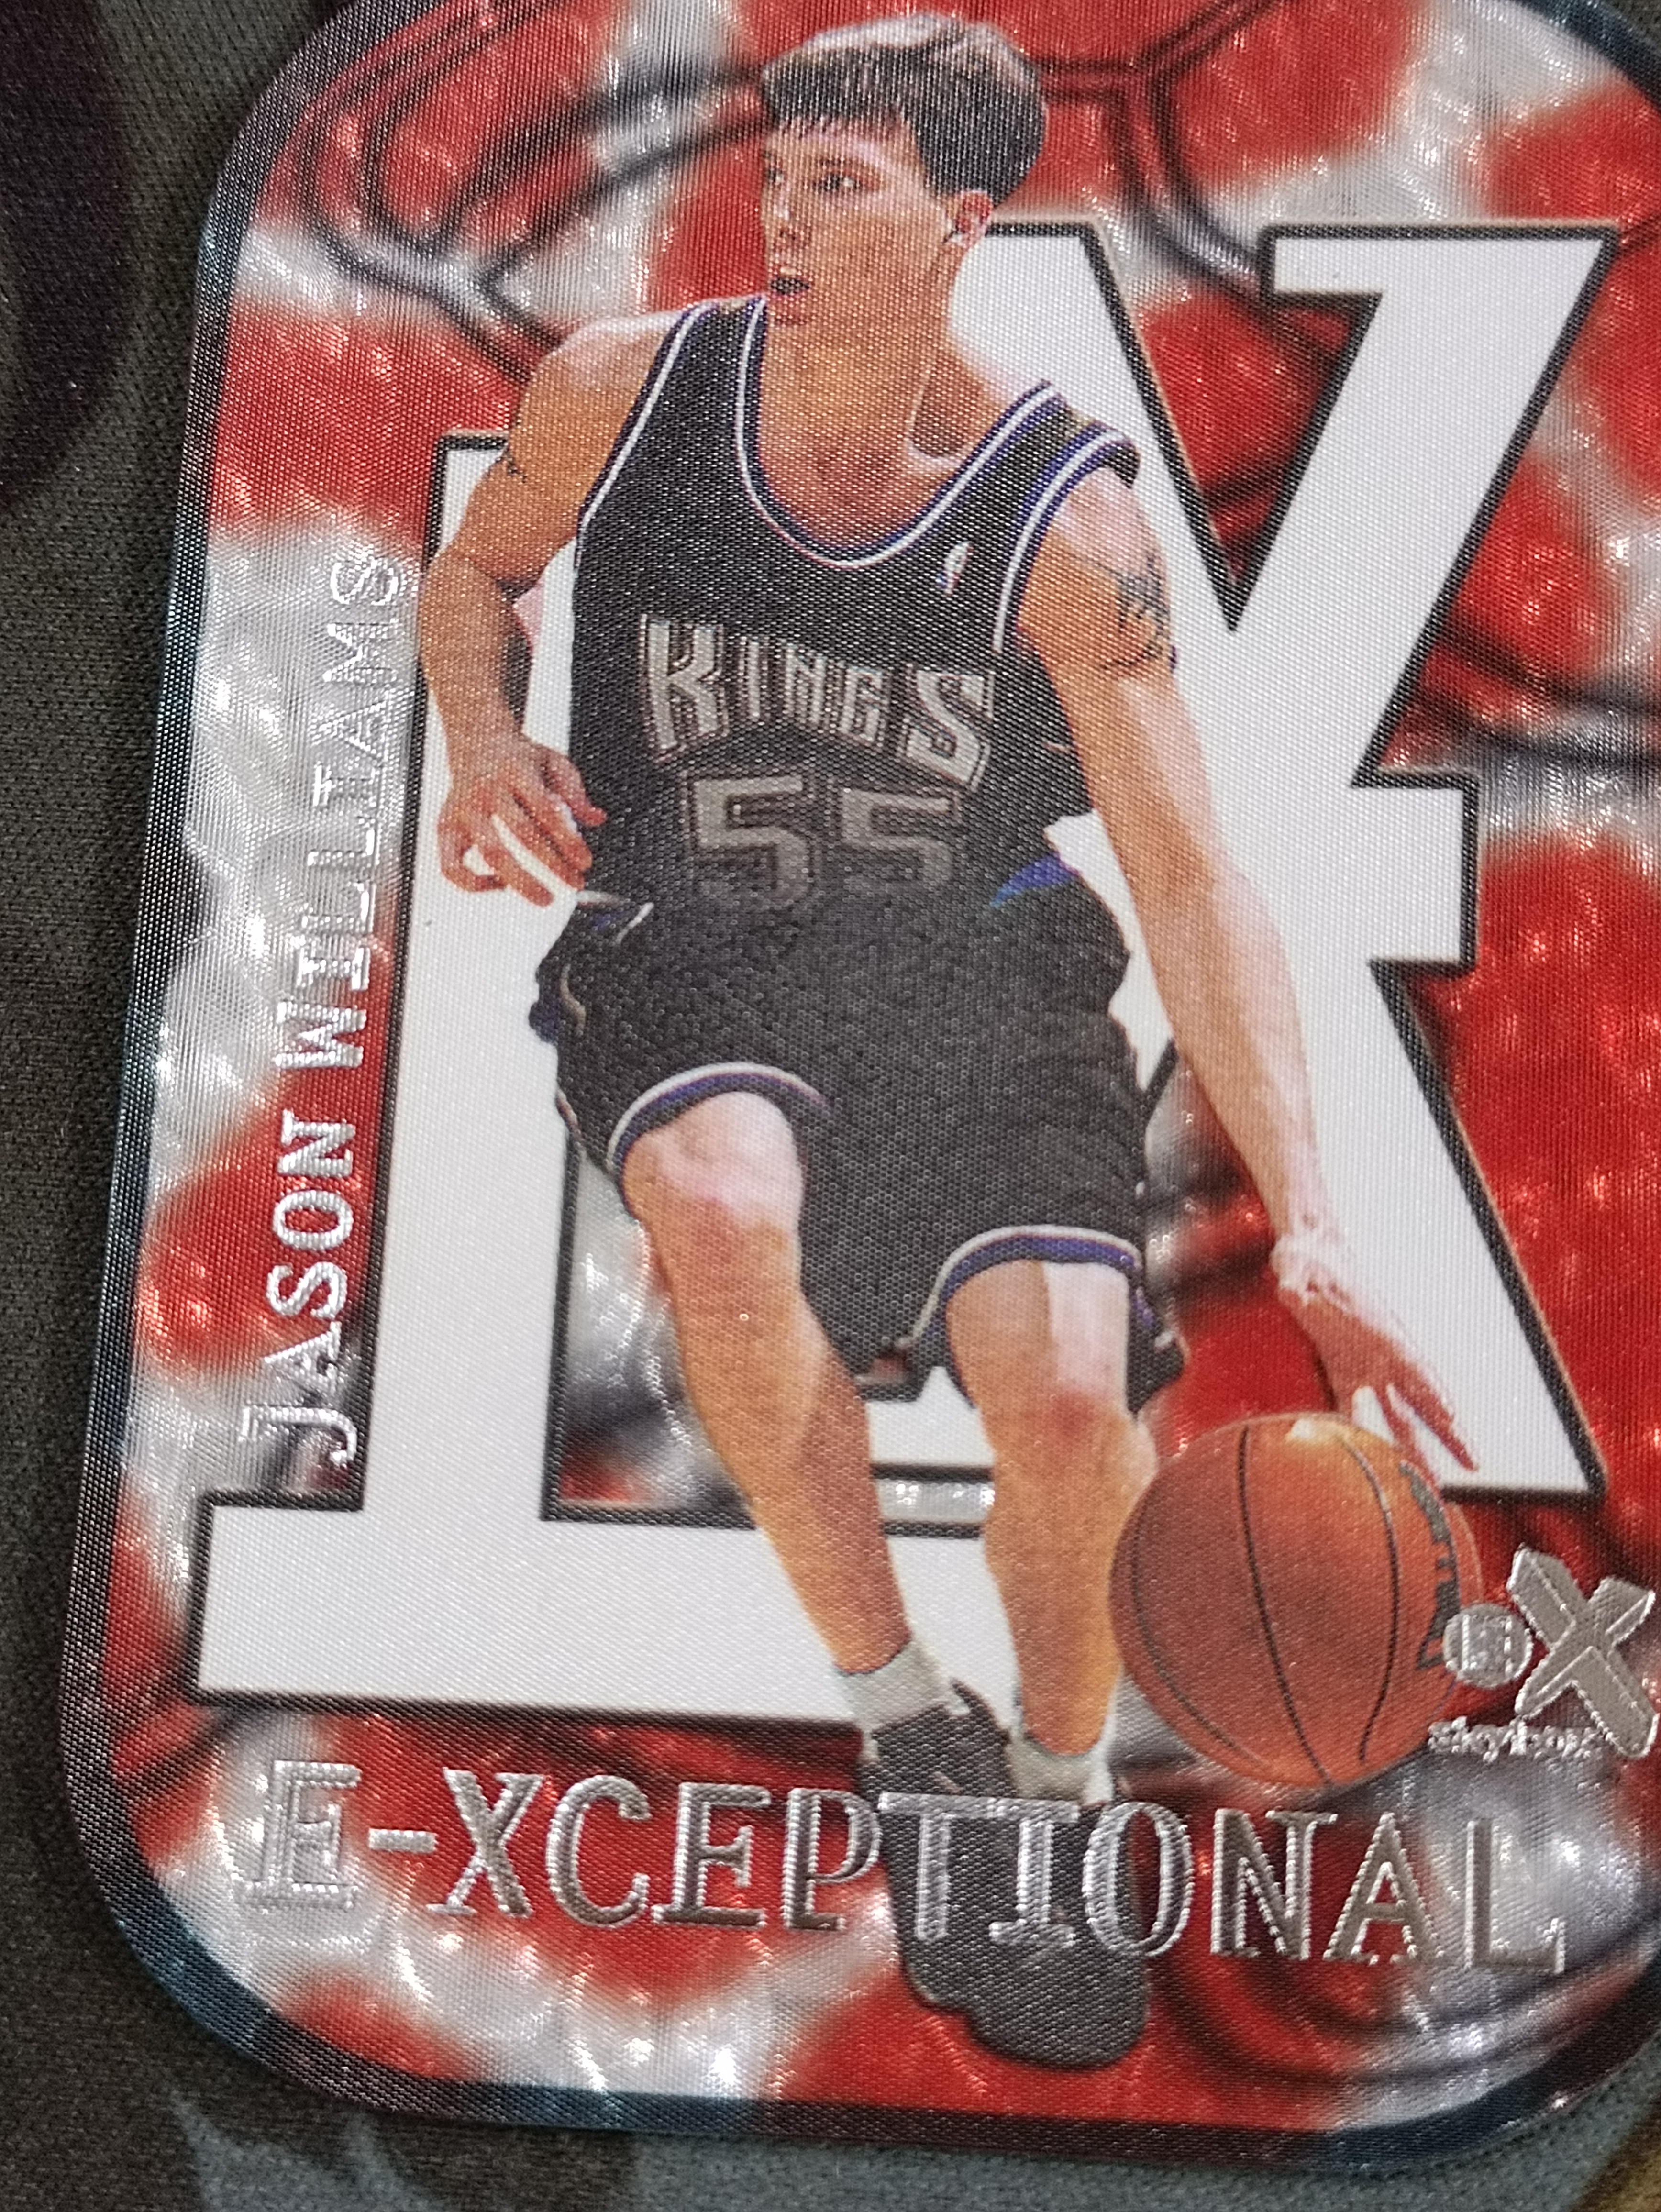 1999-00 SkyBox EX Jason Williams 白巧克力 杰森威廉姆斯 E-XCEPTIONAL 大比例 SP 红蛋蛋卡 经典特卡 国王(品见大图小瑕)《苏州卡通》J【XW】